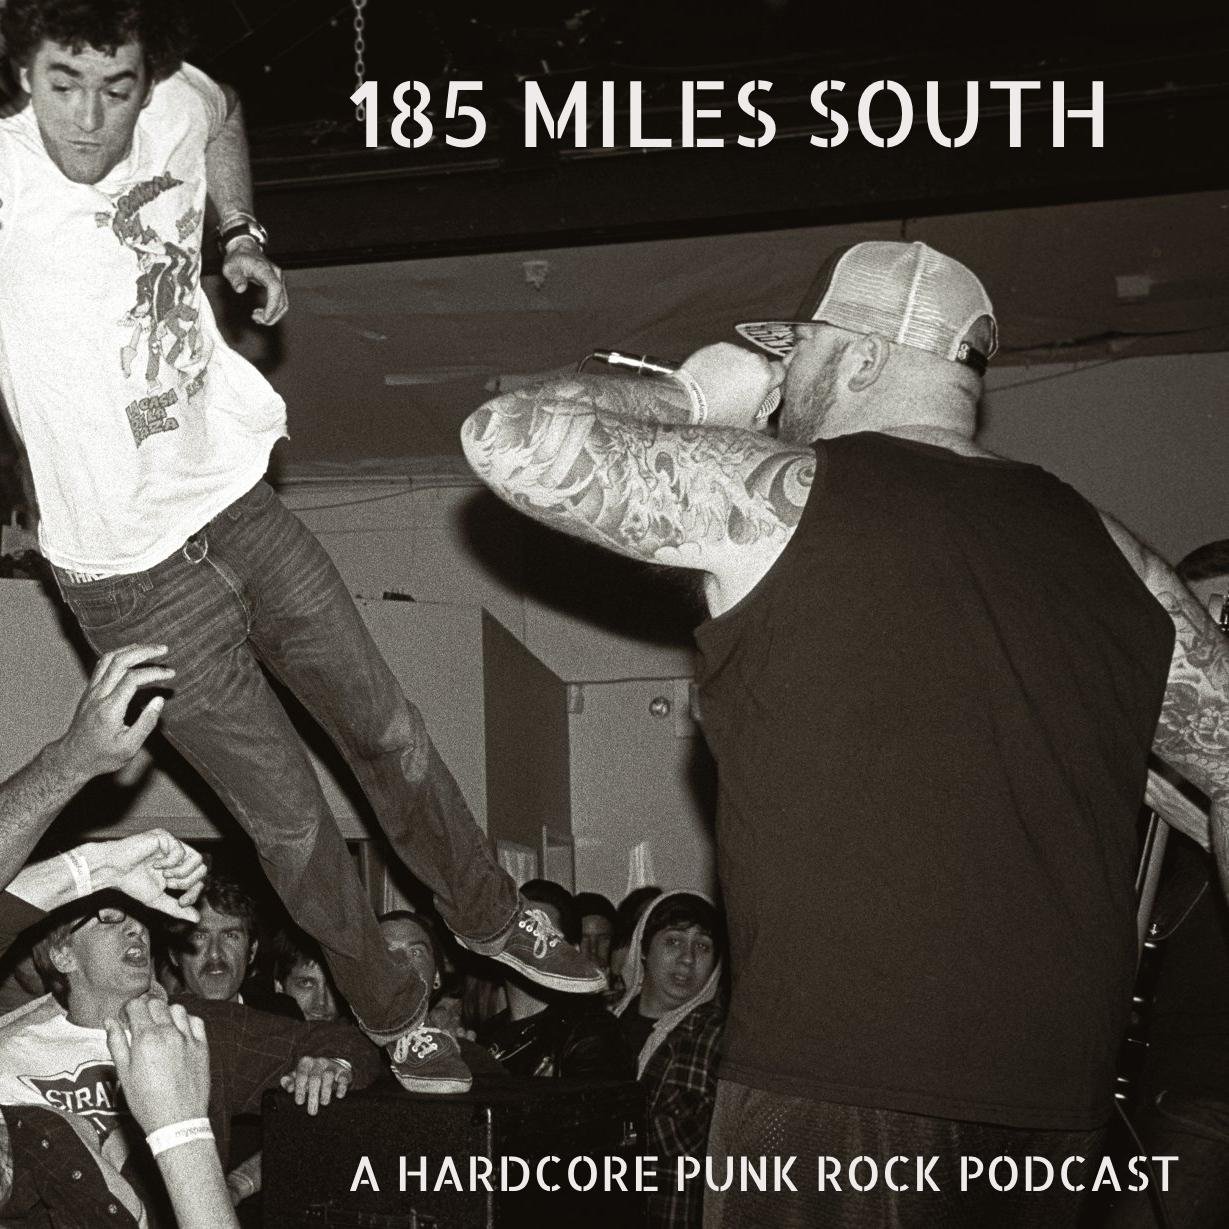 A hardcore punk rock podcast.